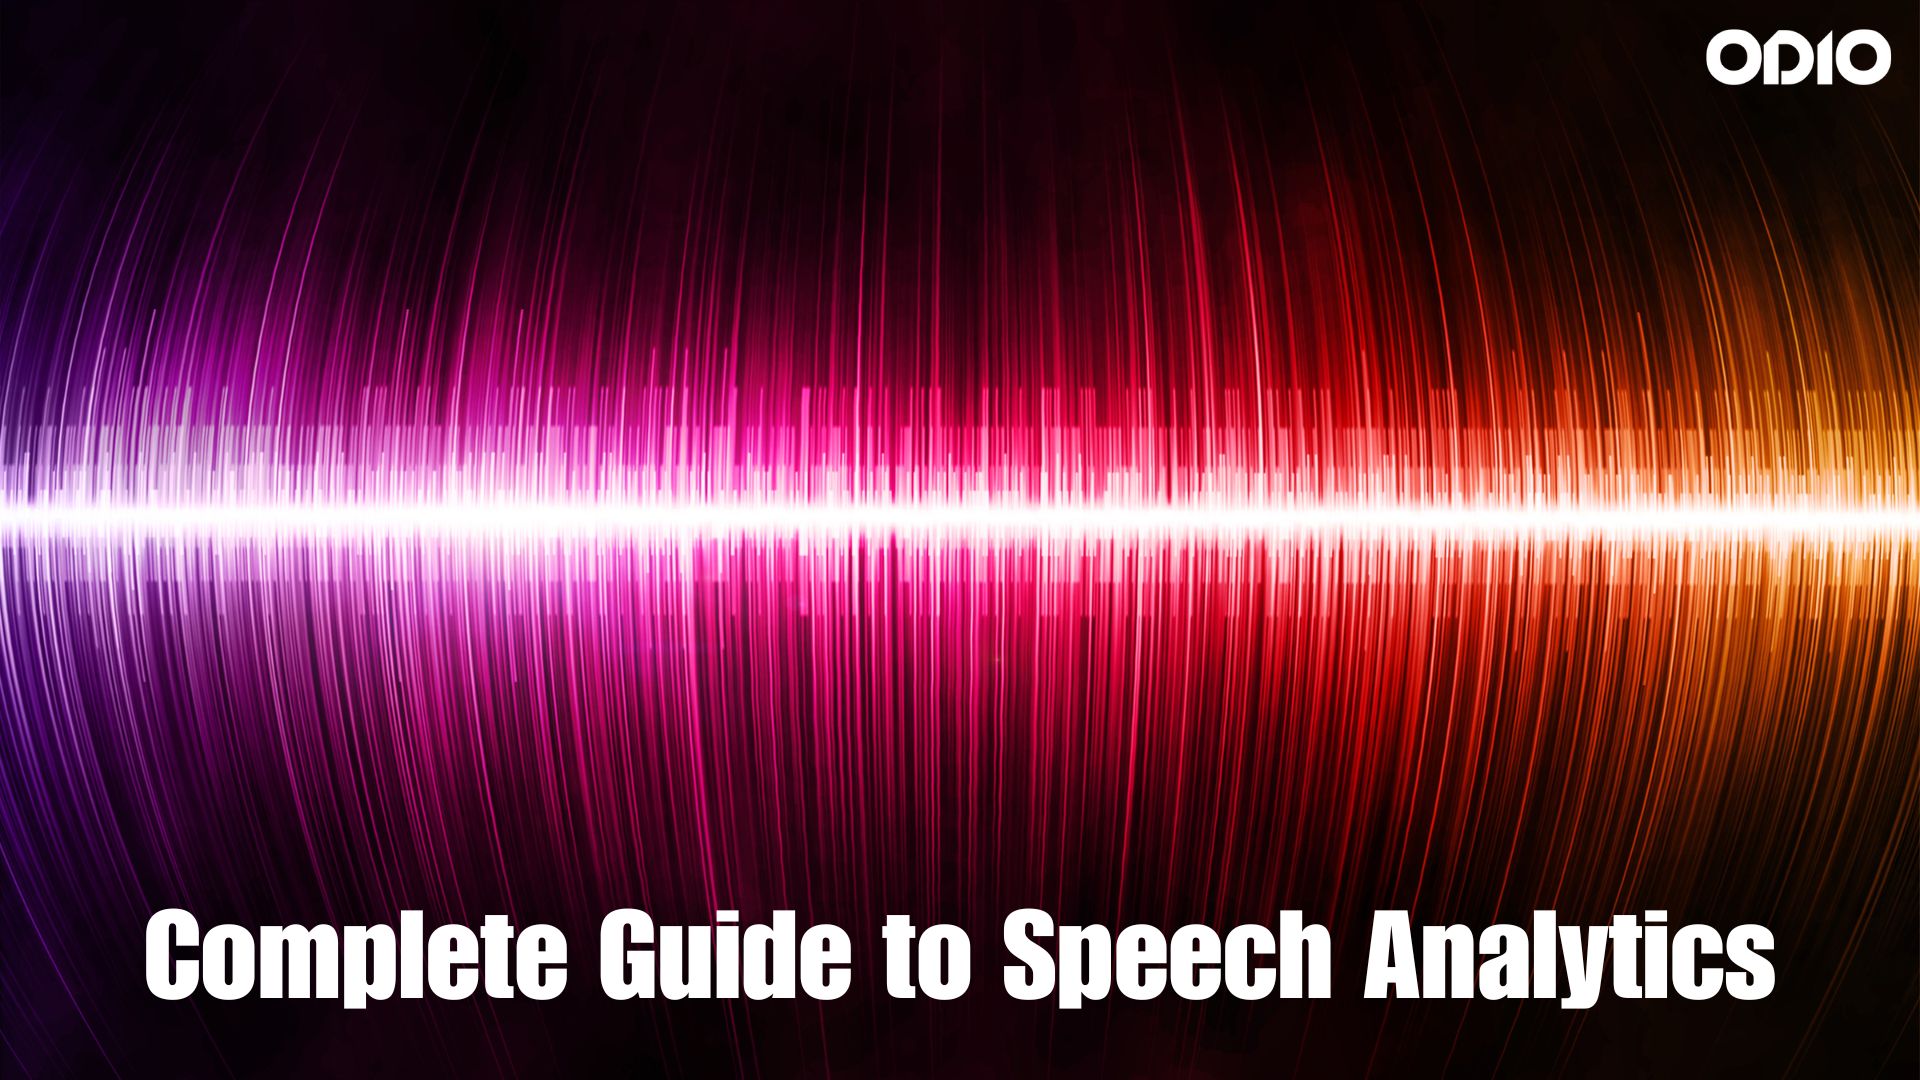 Image showing soundwaves to emphasize on Speech Analytics